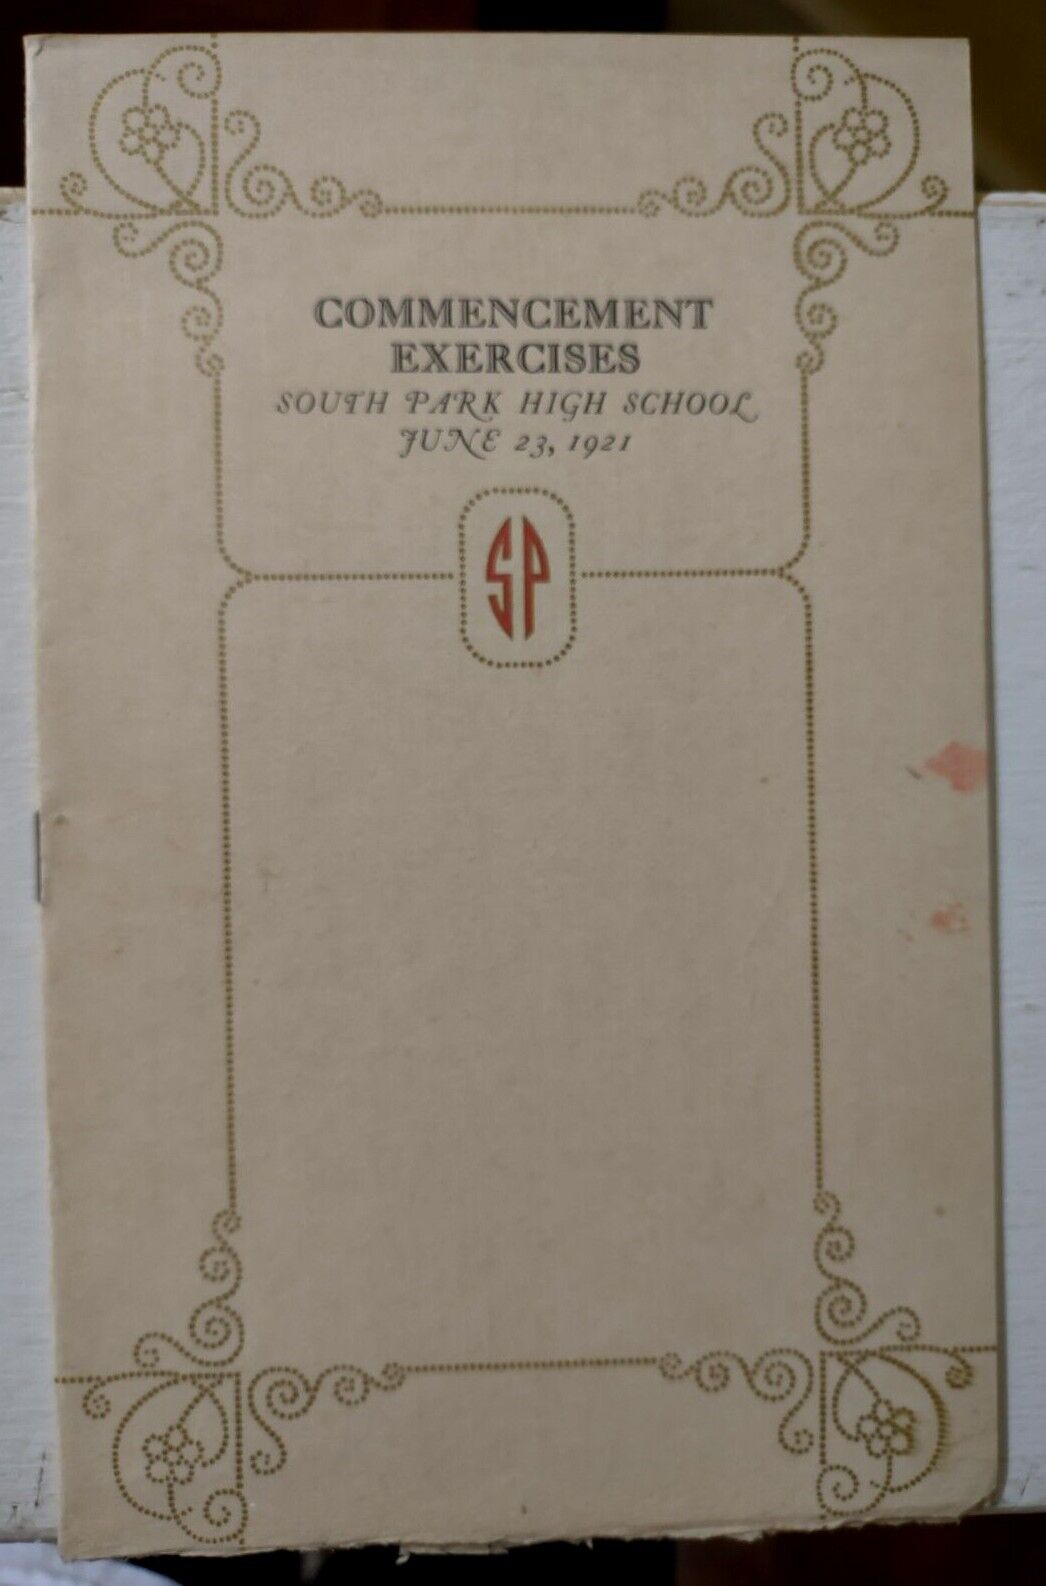 1921 South Park High School South Buffalo NY Commencement Program